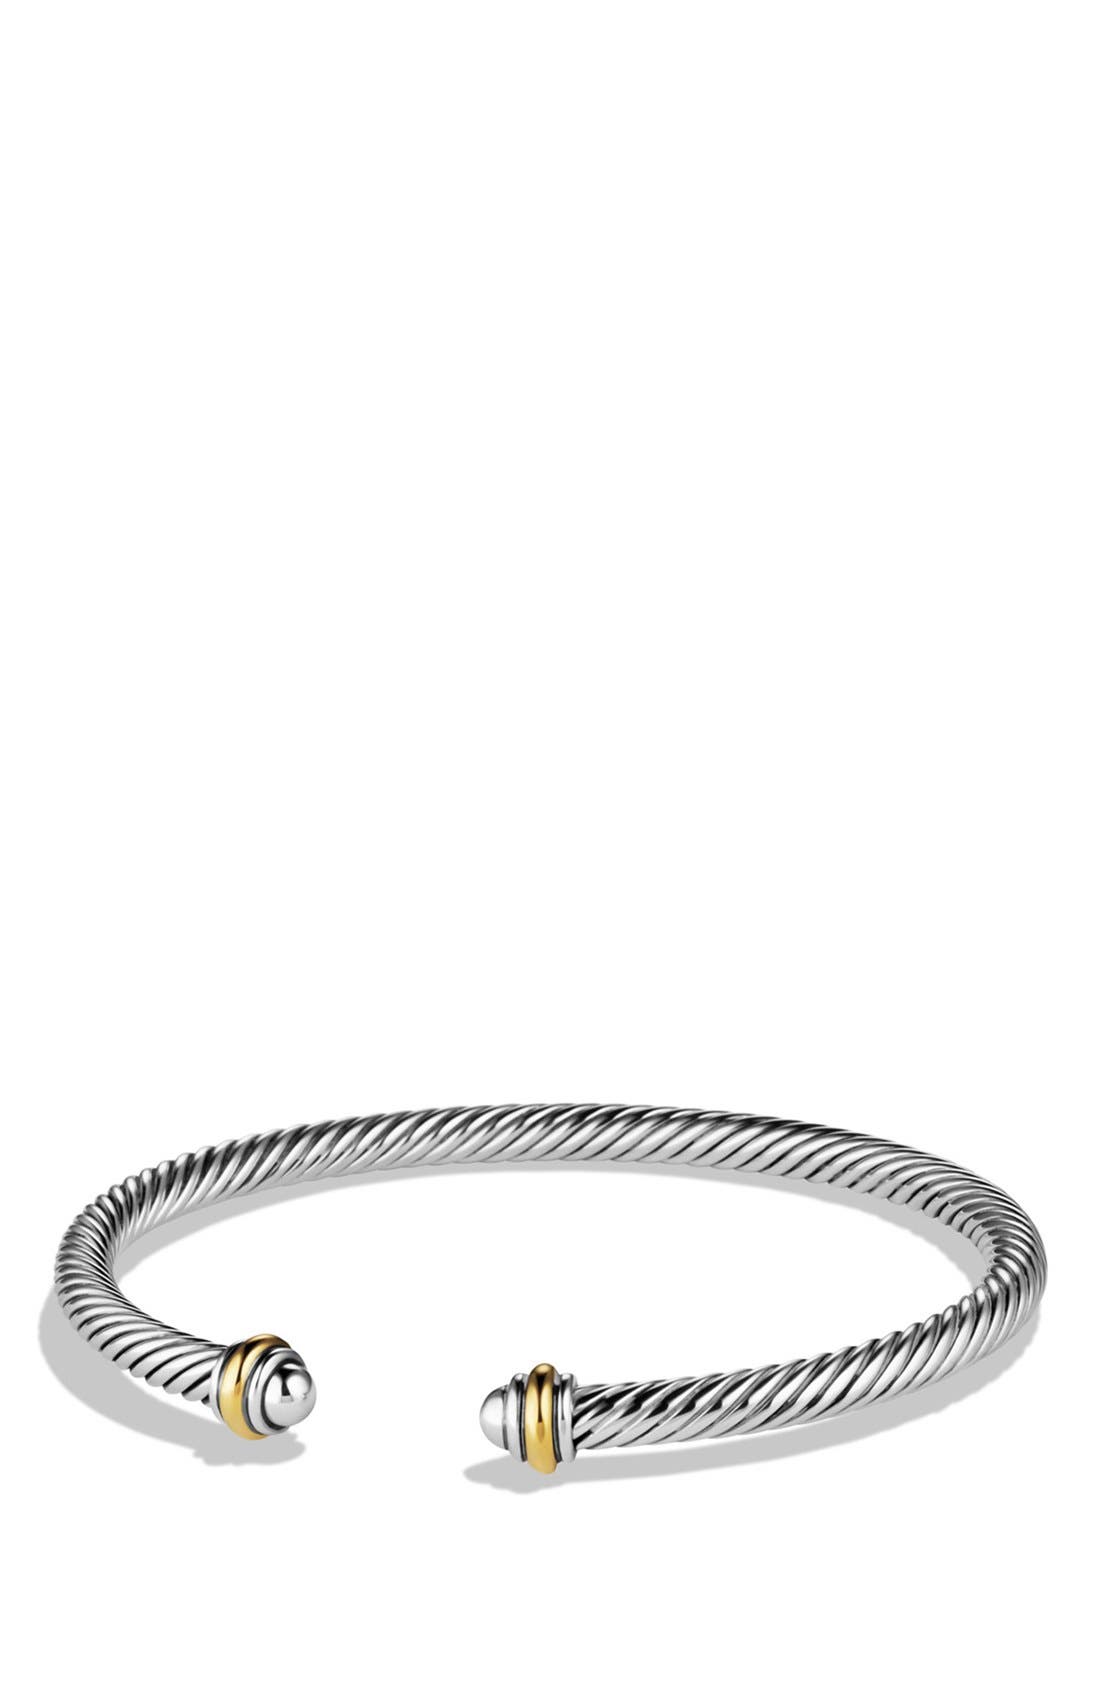 Details about  / $650 David Yurman Sterling Silver 4mm Cable Classics Bangle Bracelet